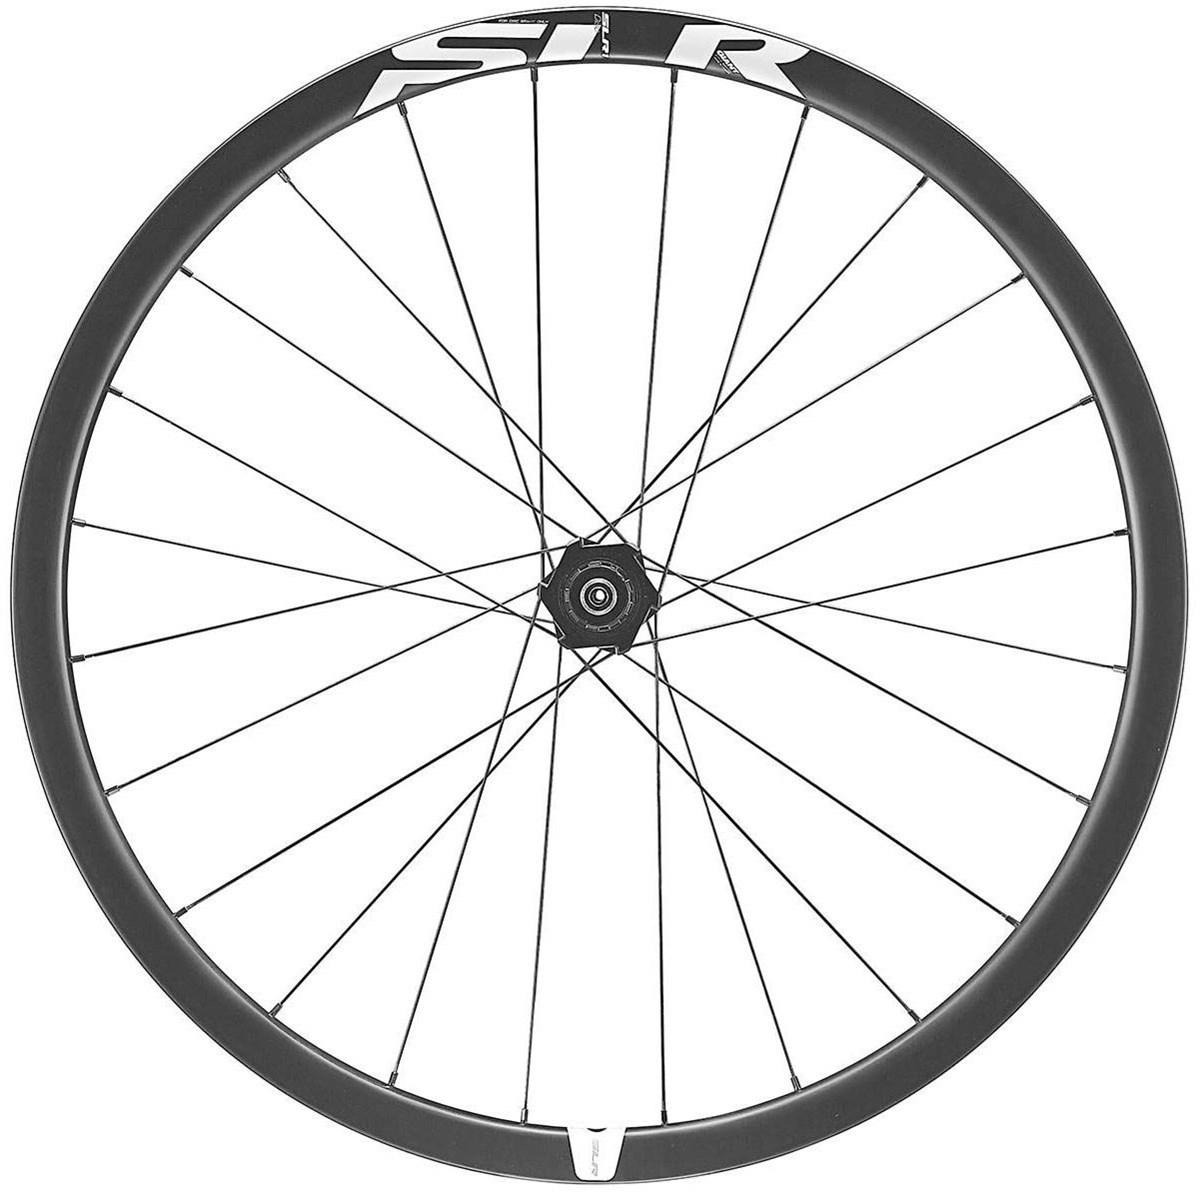 Giant SLR 1 Disc Wheel System (Rear Wheel)